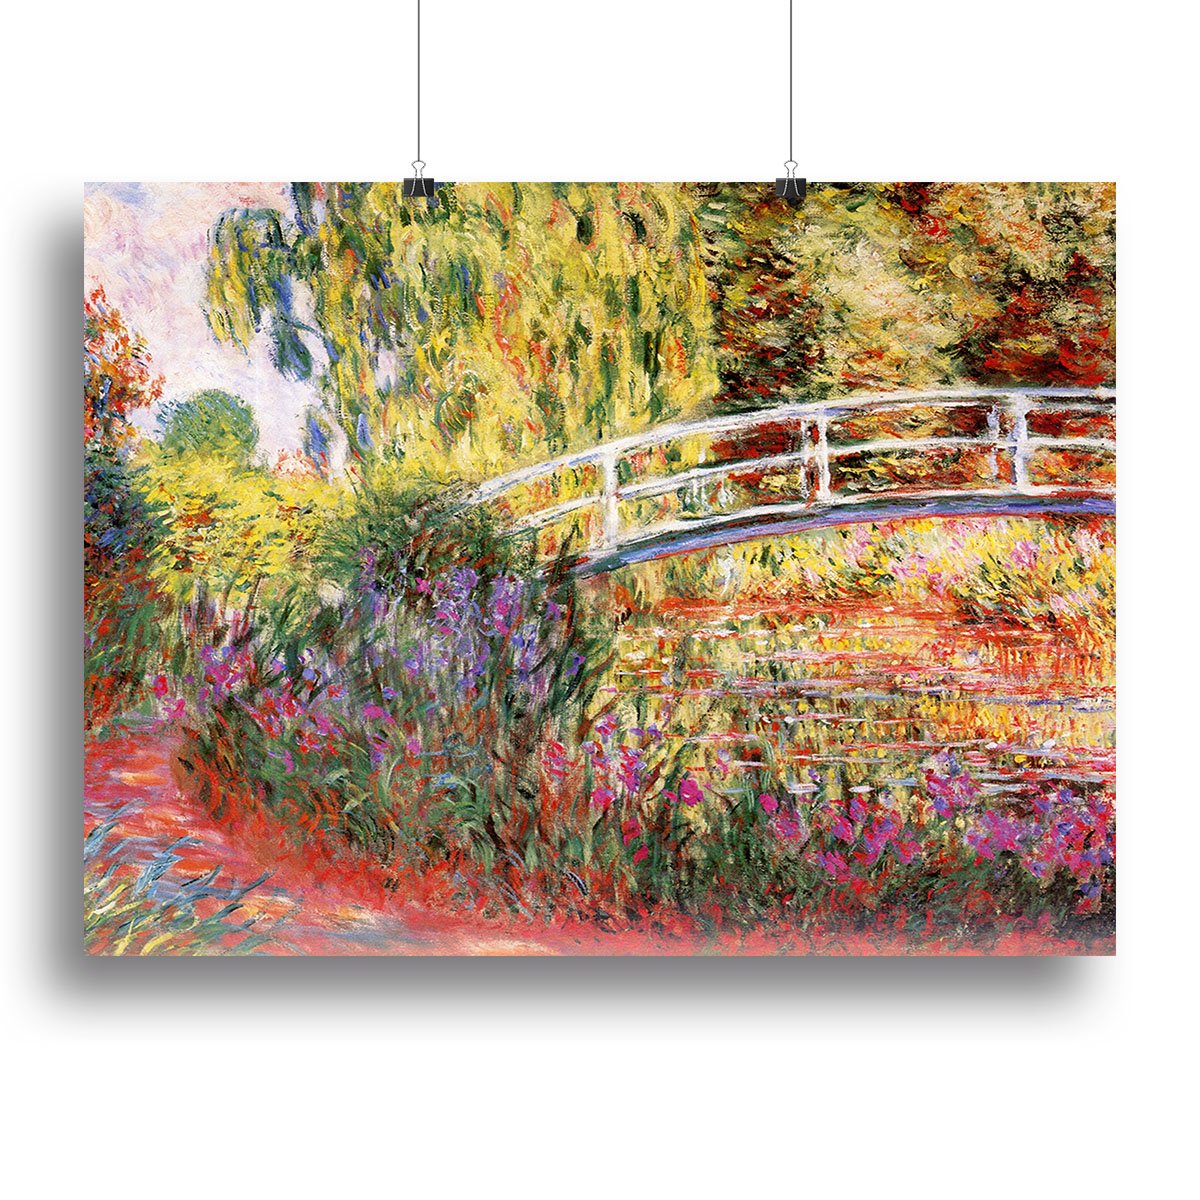 Le Bassin aux Nympheas by Monet Canvas Print or Poster